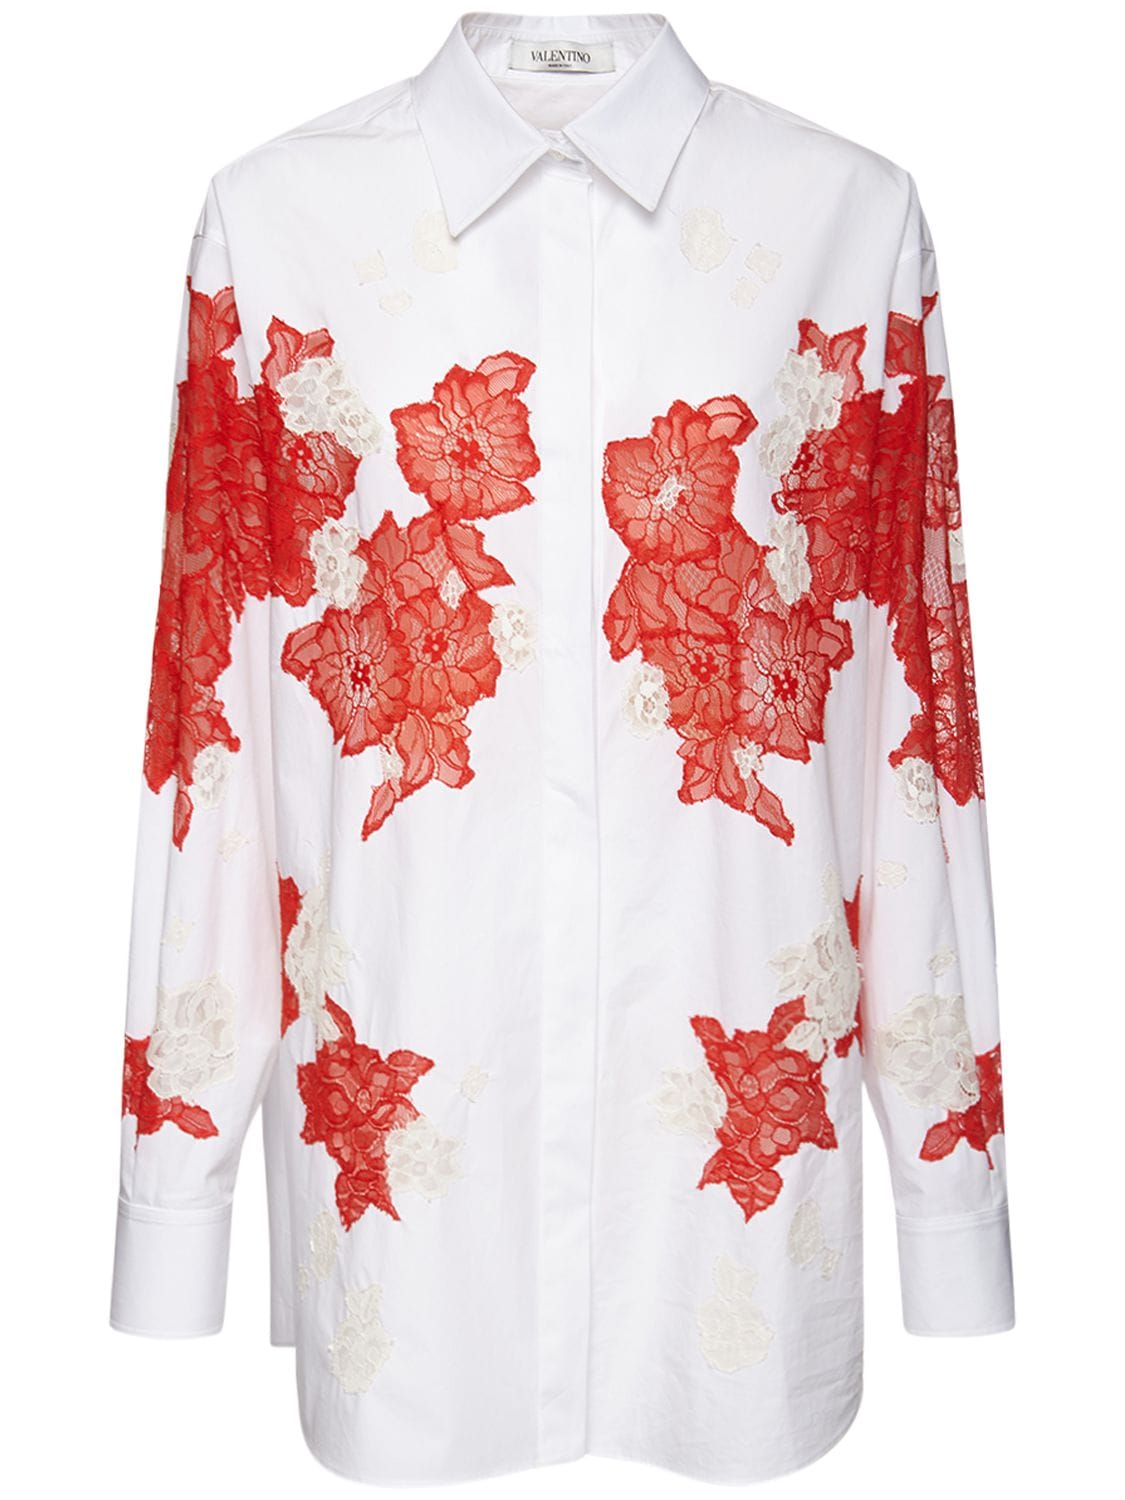 Cotton Lace Blossom Shirt